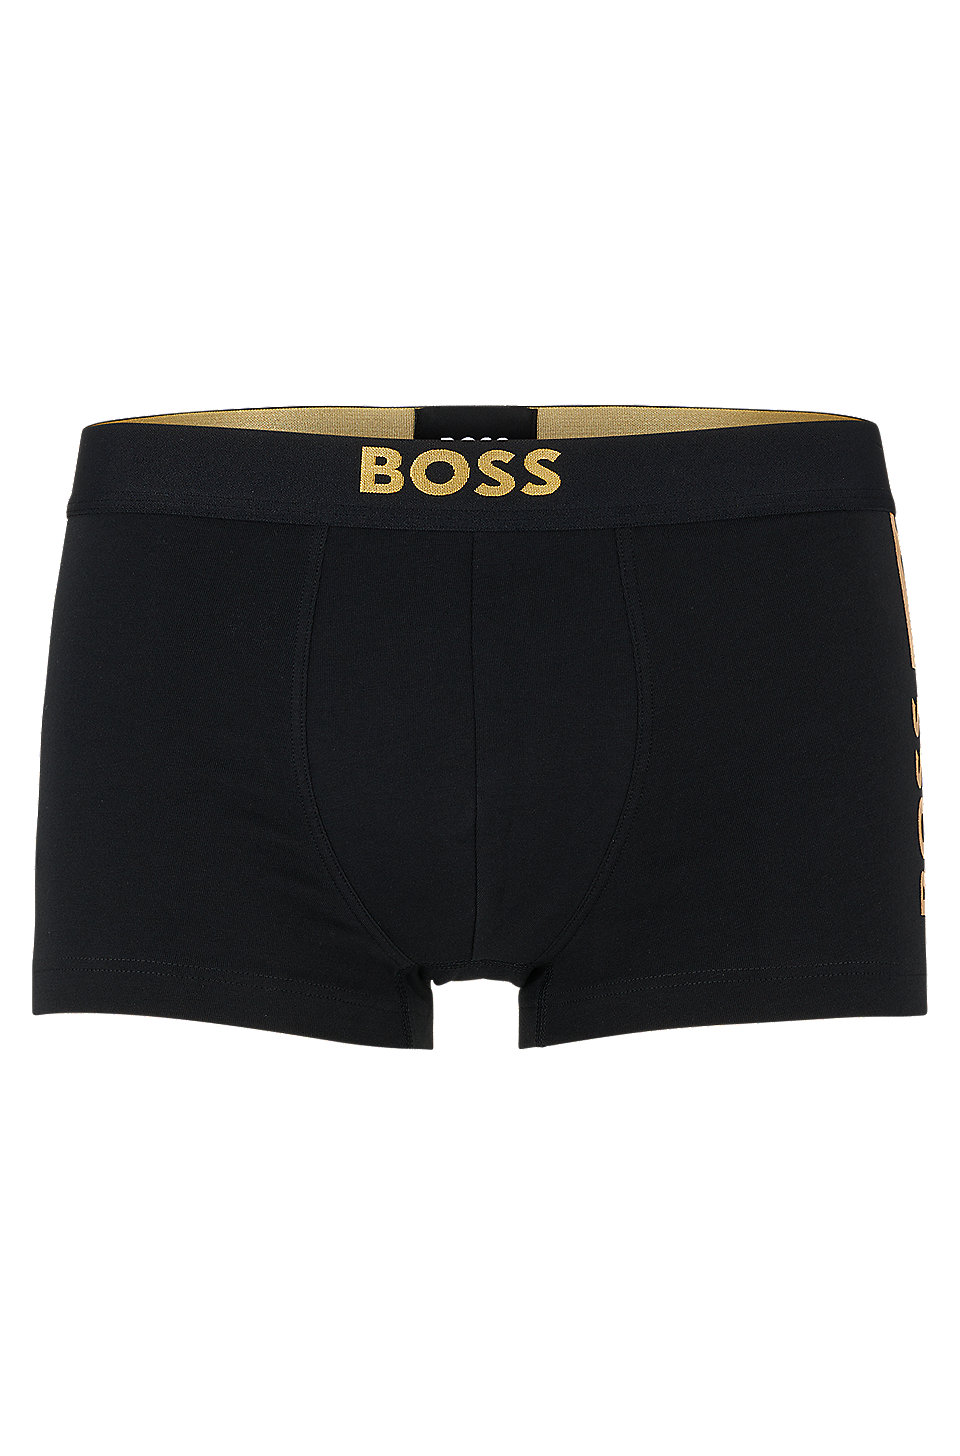 BOSS - Stretch-cotton trunks with metallic-effect branding